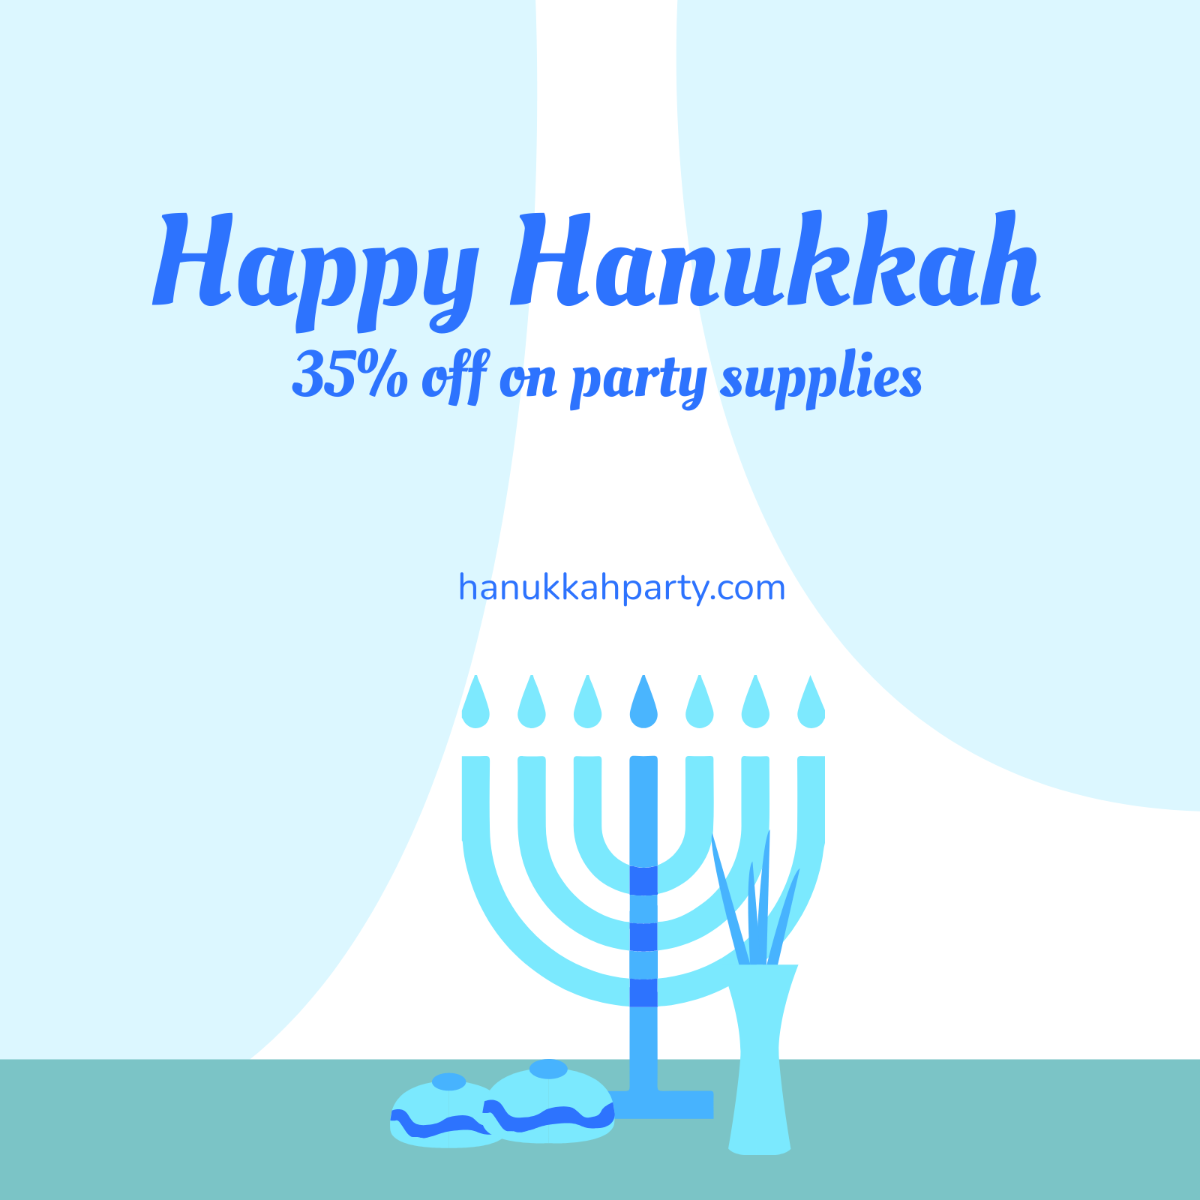 Free Hanukkah Flyer Vector Template